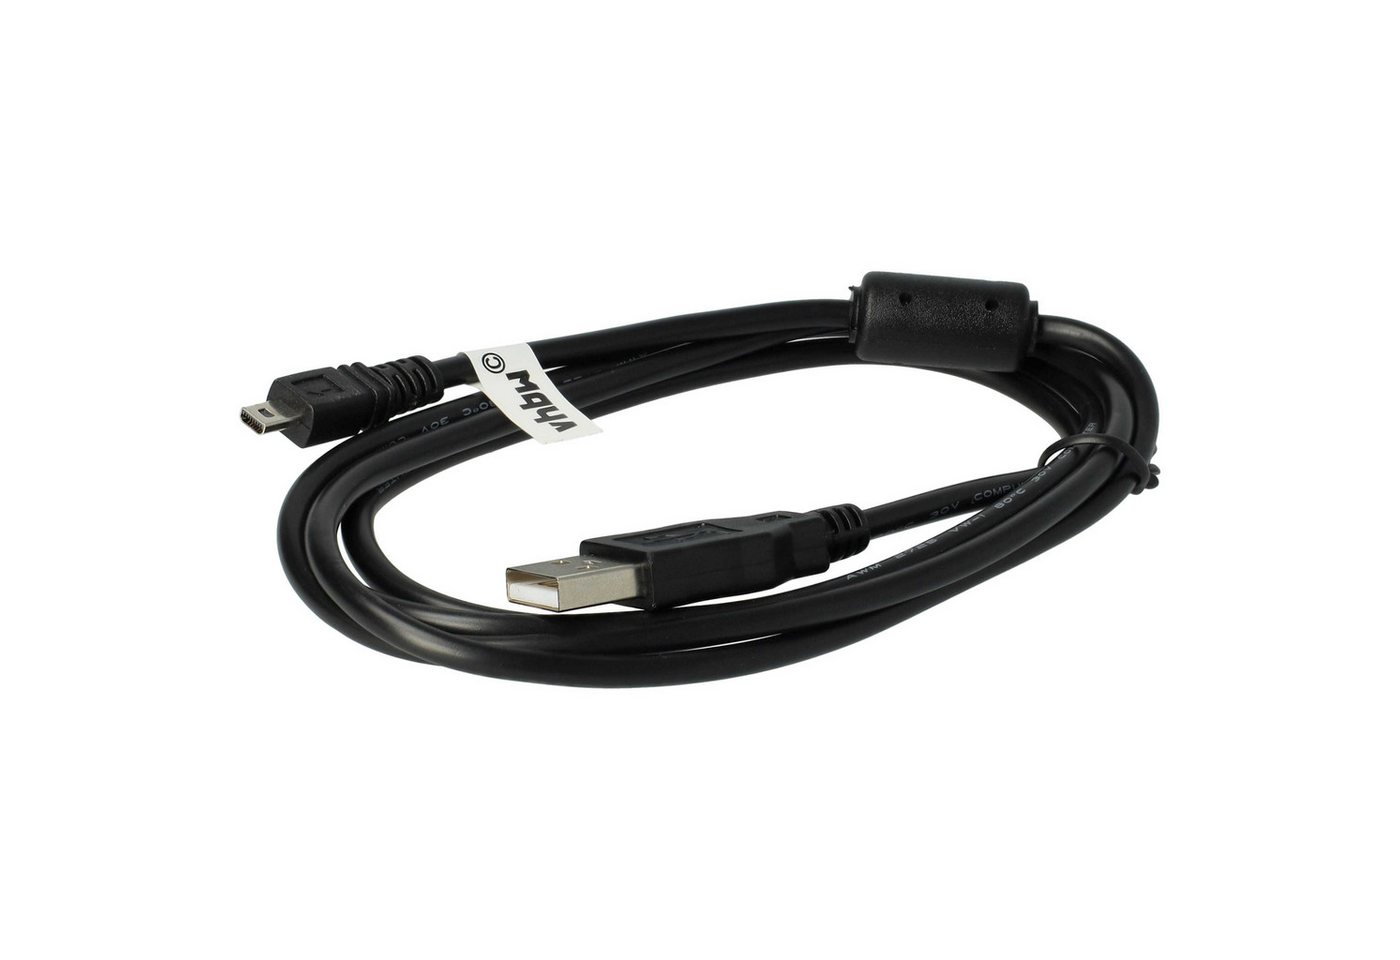 vhbw passend für Panasonic Lumix DMC-FS50, DMC-FS5, DMC-FS5 USB-Kabel von vhbw